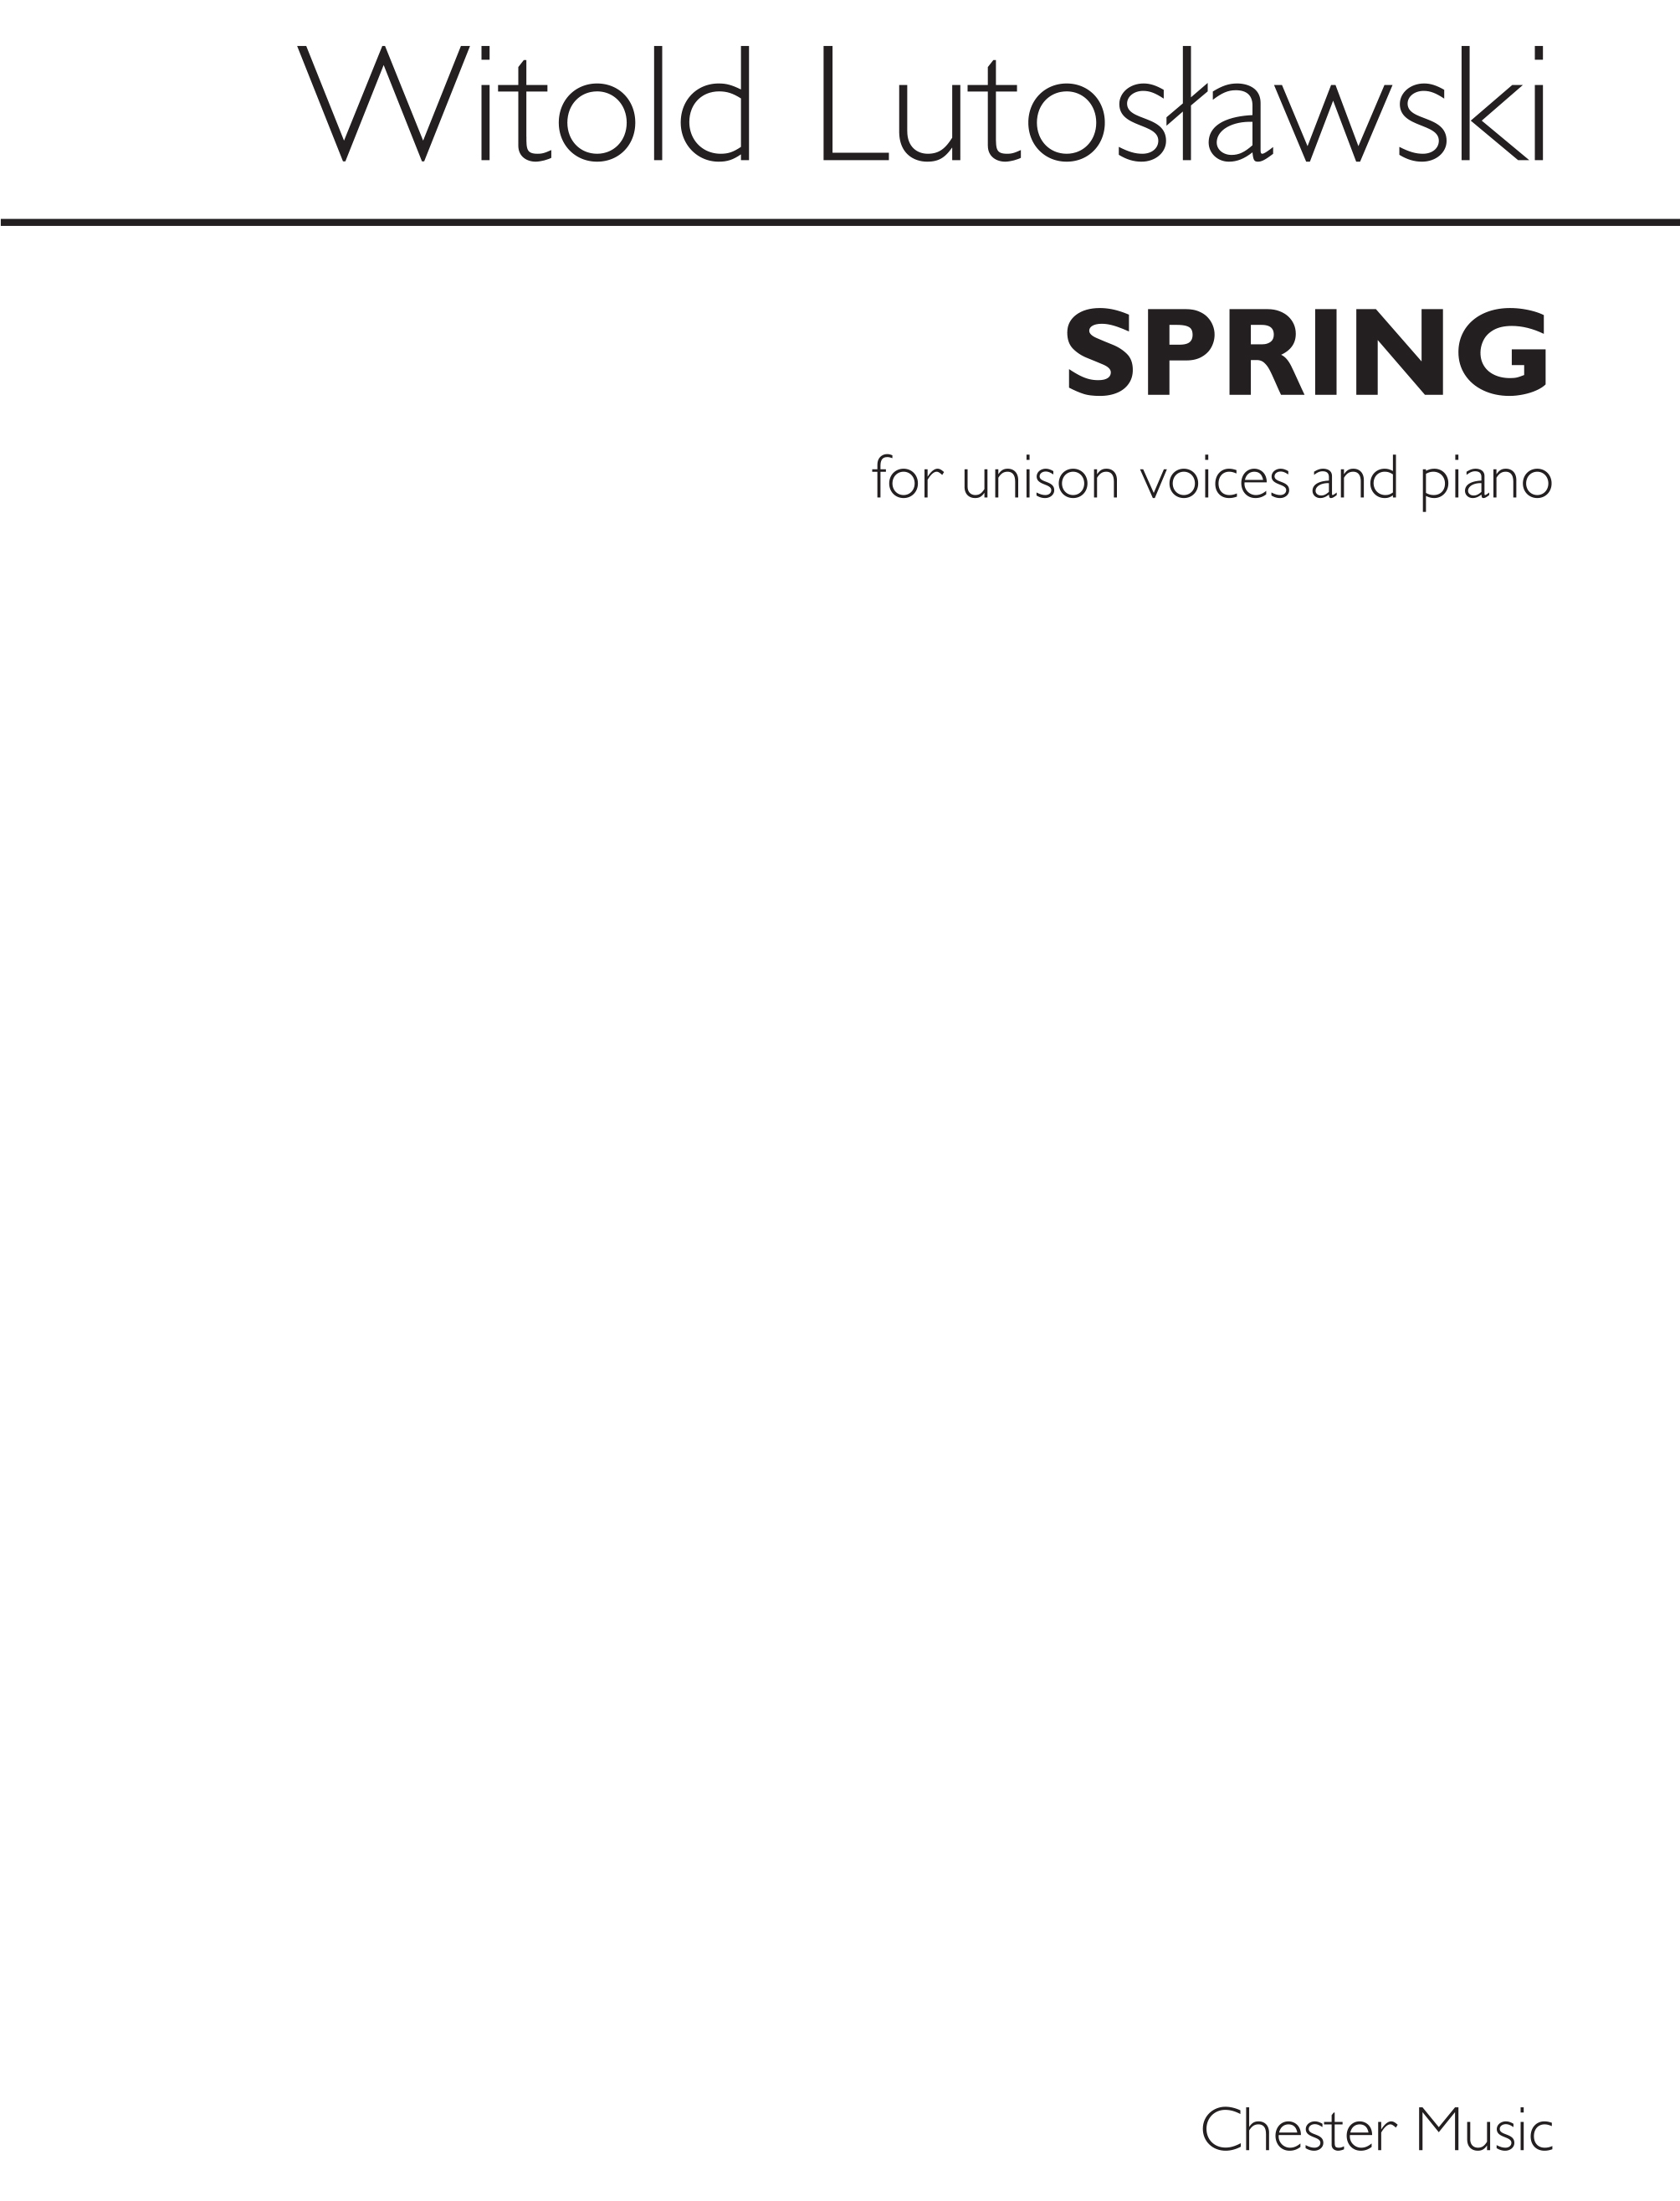 Witold Lutoslawski: Witold Lutosawski: Spring: Unison Voices: Vocal Score